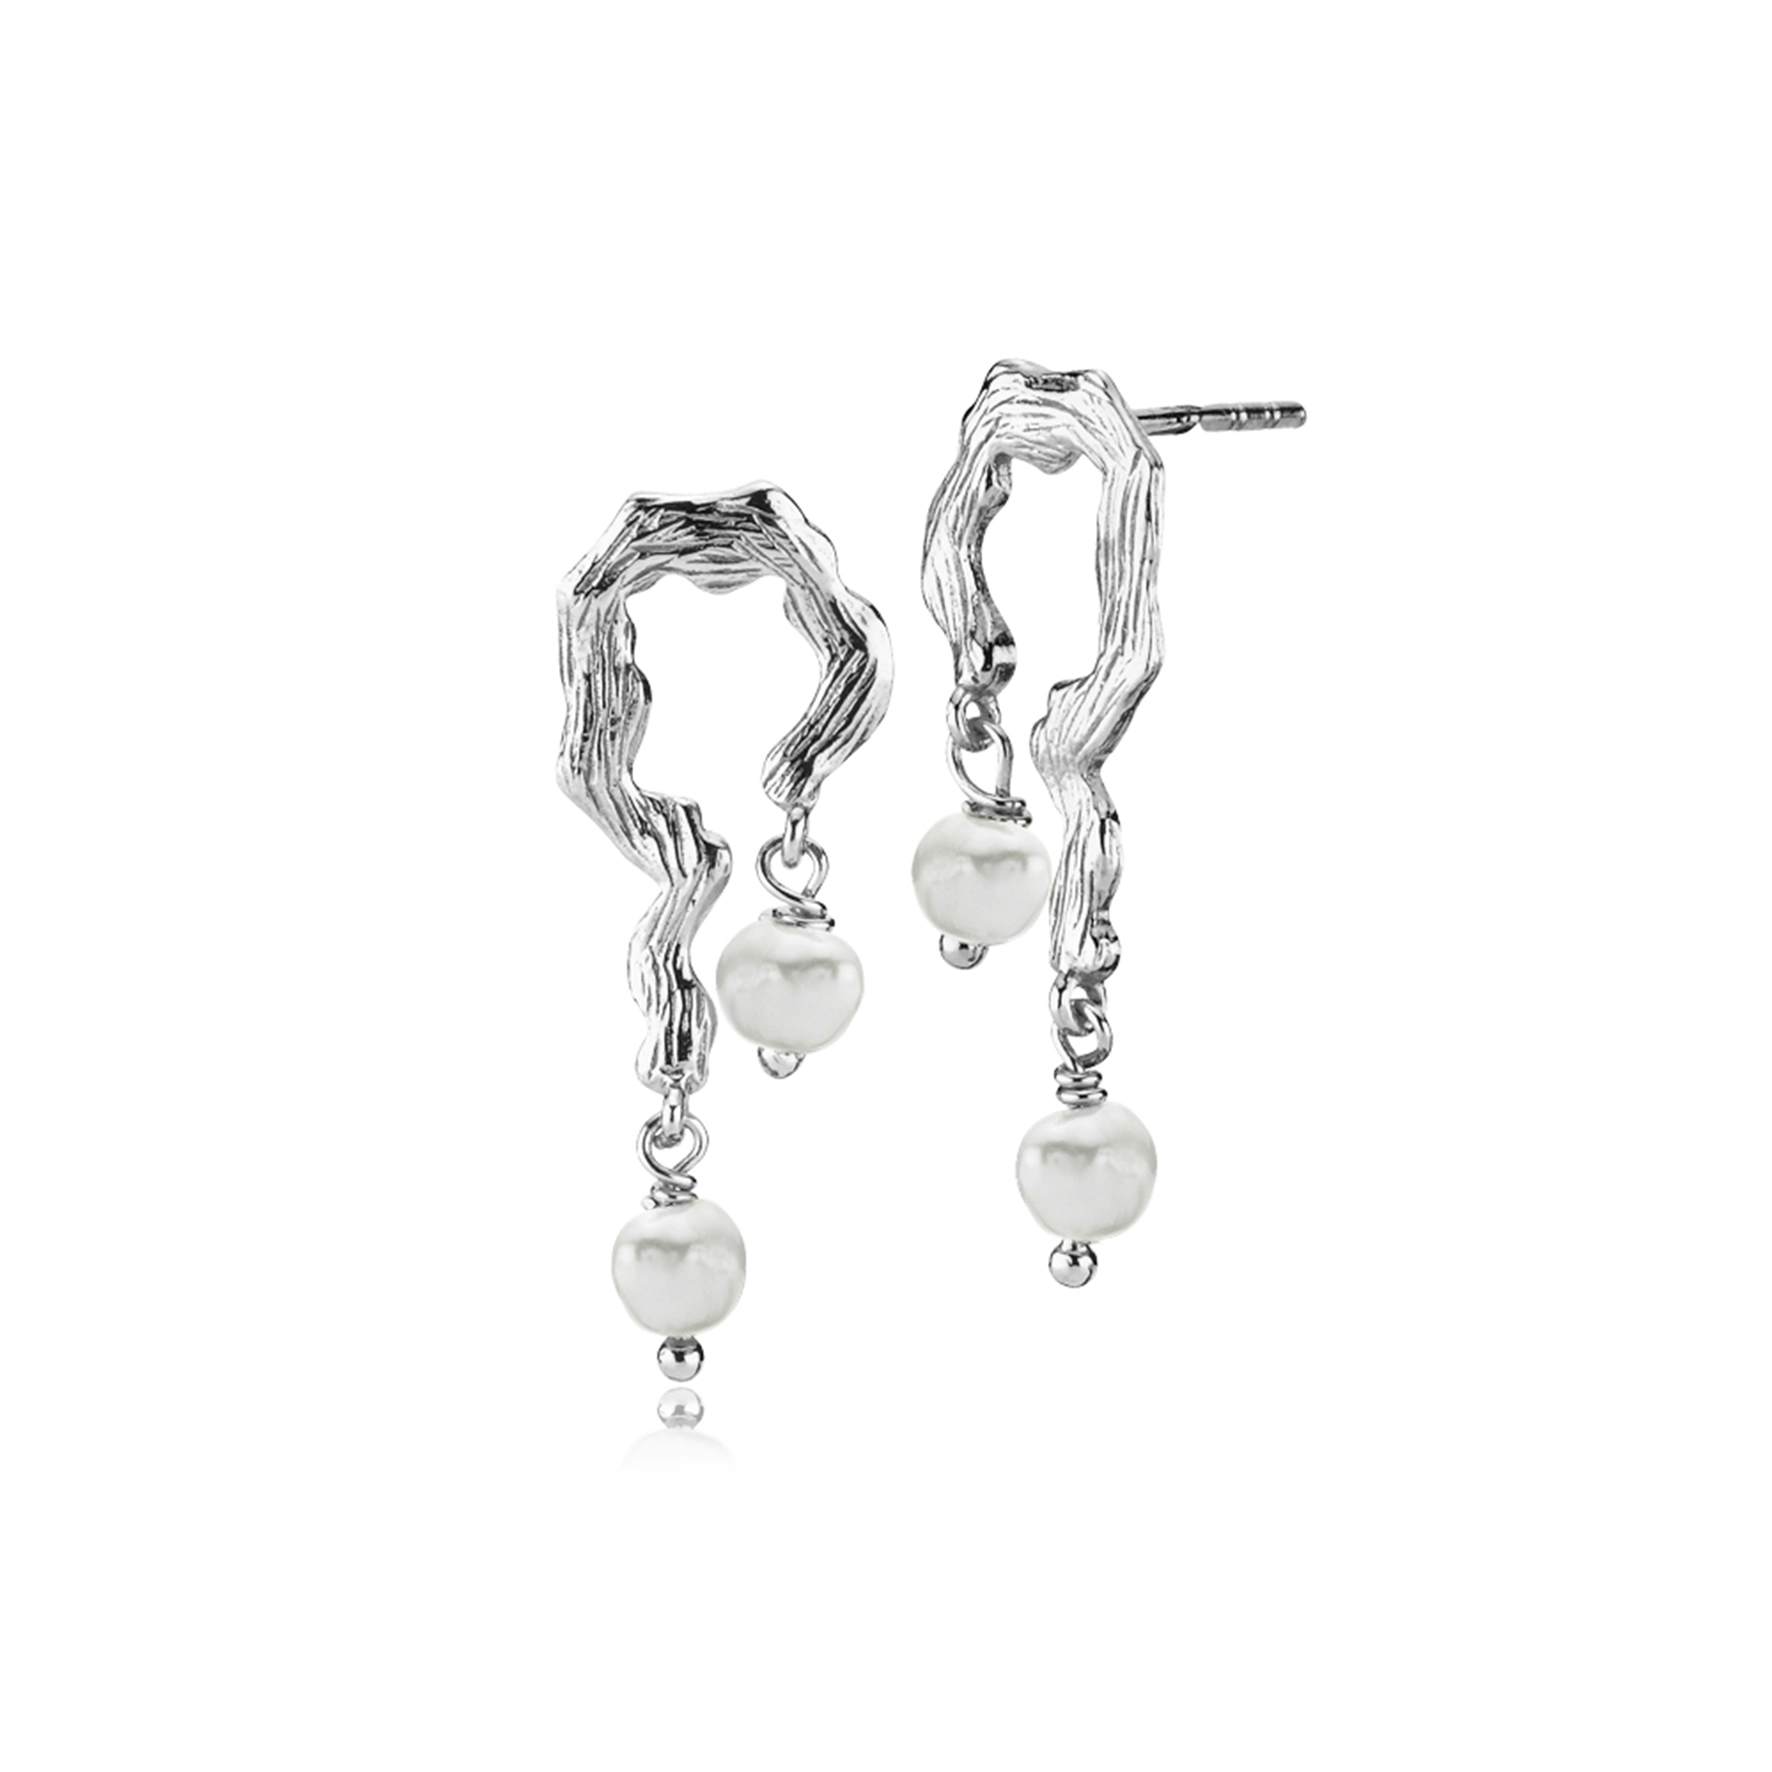 Lærke Bentsen By Sistie Earrings With Pearls från Sistie i Silver Sterling 925